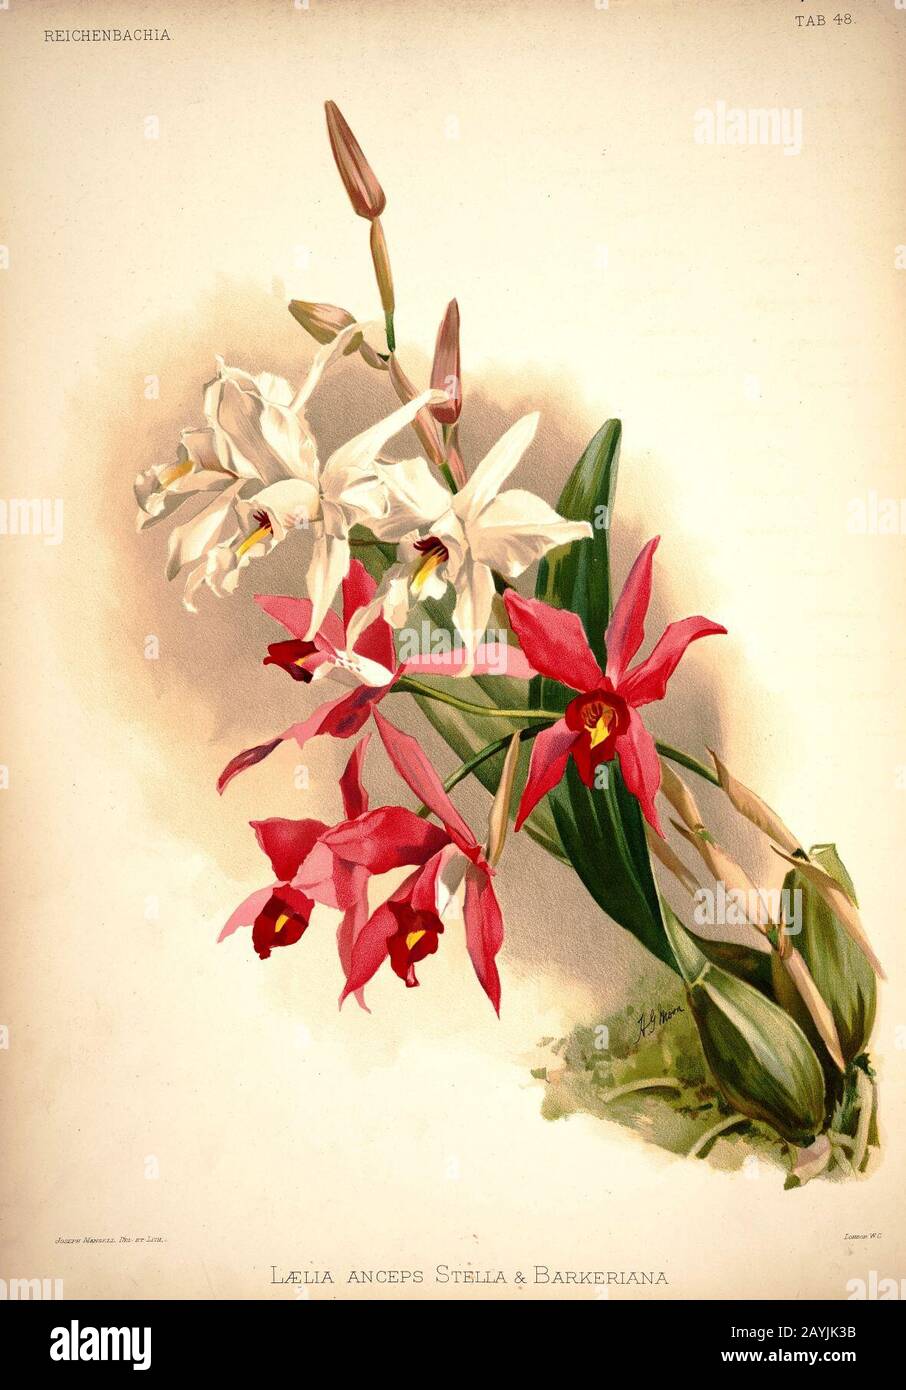 Frederick Sander - Reichenbachia I plate 48 (1888) - Laelia anceps stella - Laelia anceps barkeriana. Stock Photo